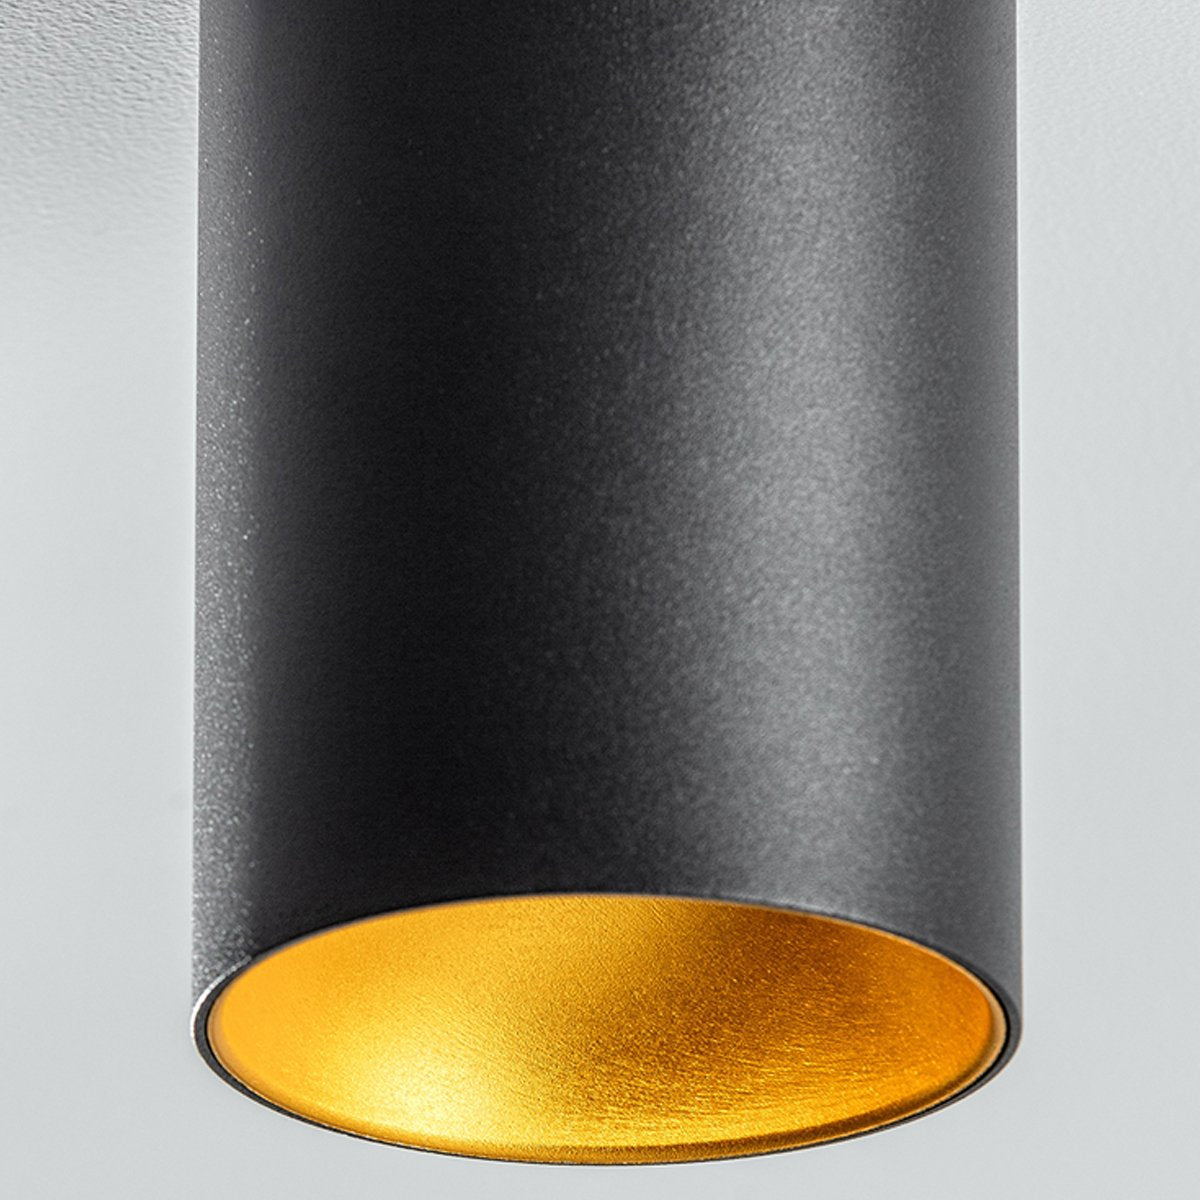 CGC SANDRA Black Cylinder Ceiling Spotlight With Gold Inner Reflector